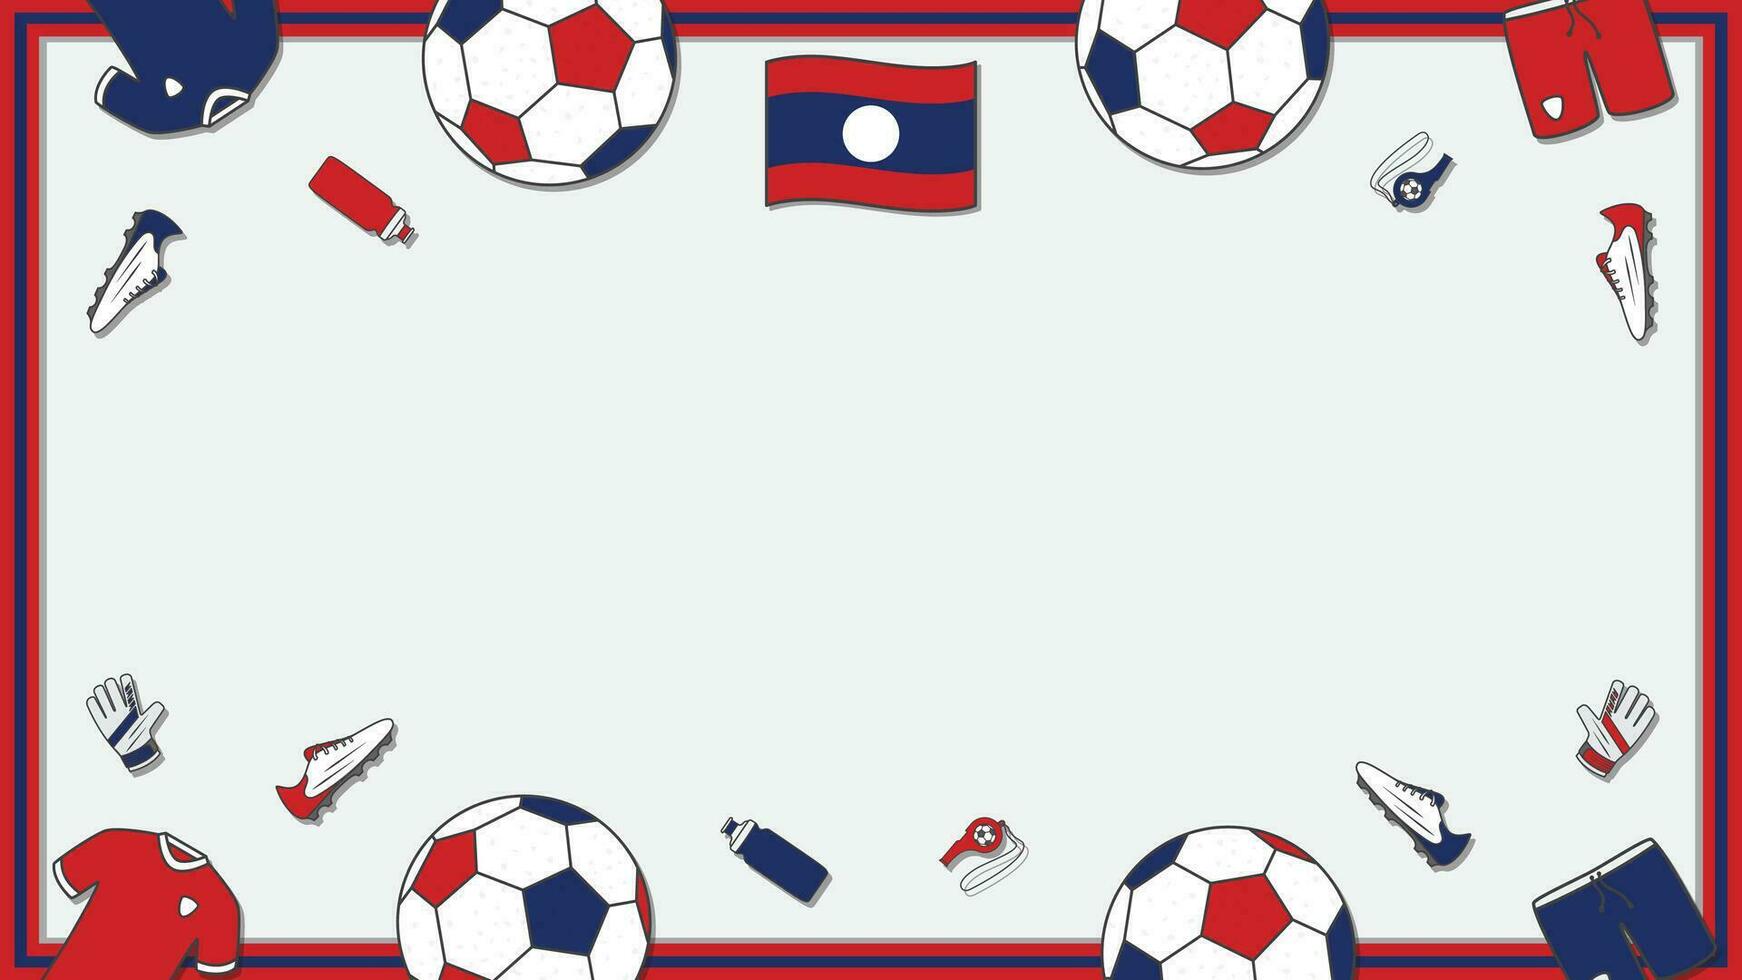 Football Background Design Template. Football Cartoon Vector Illustration. Championship In Laos